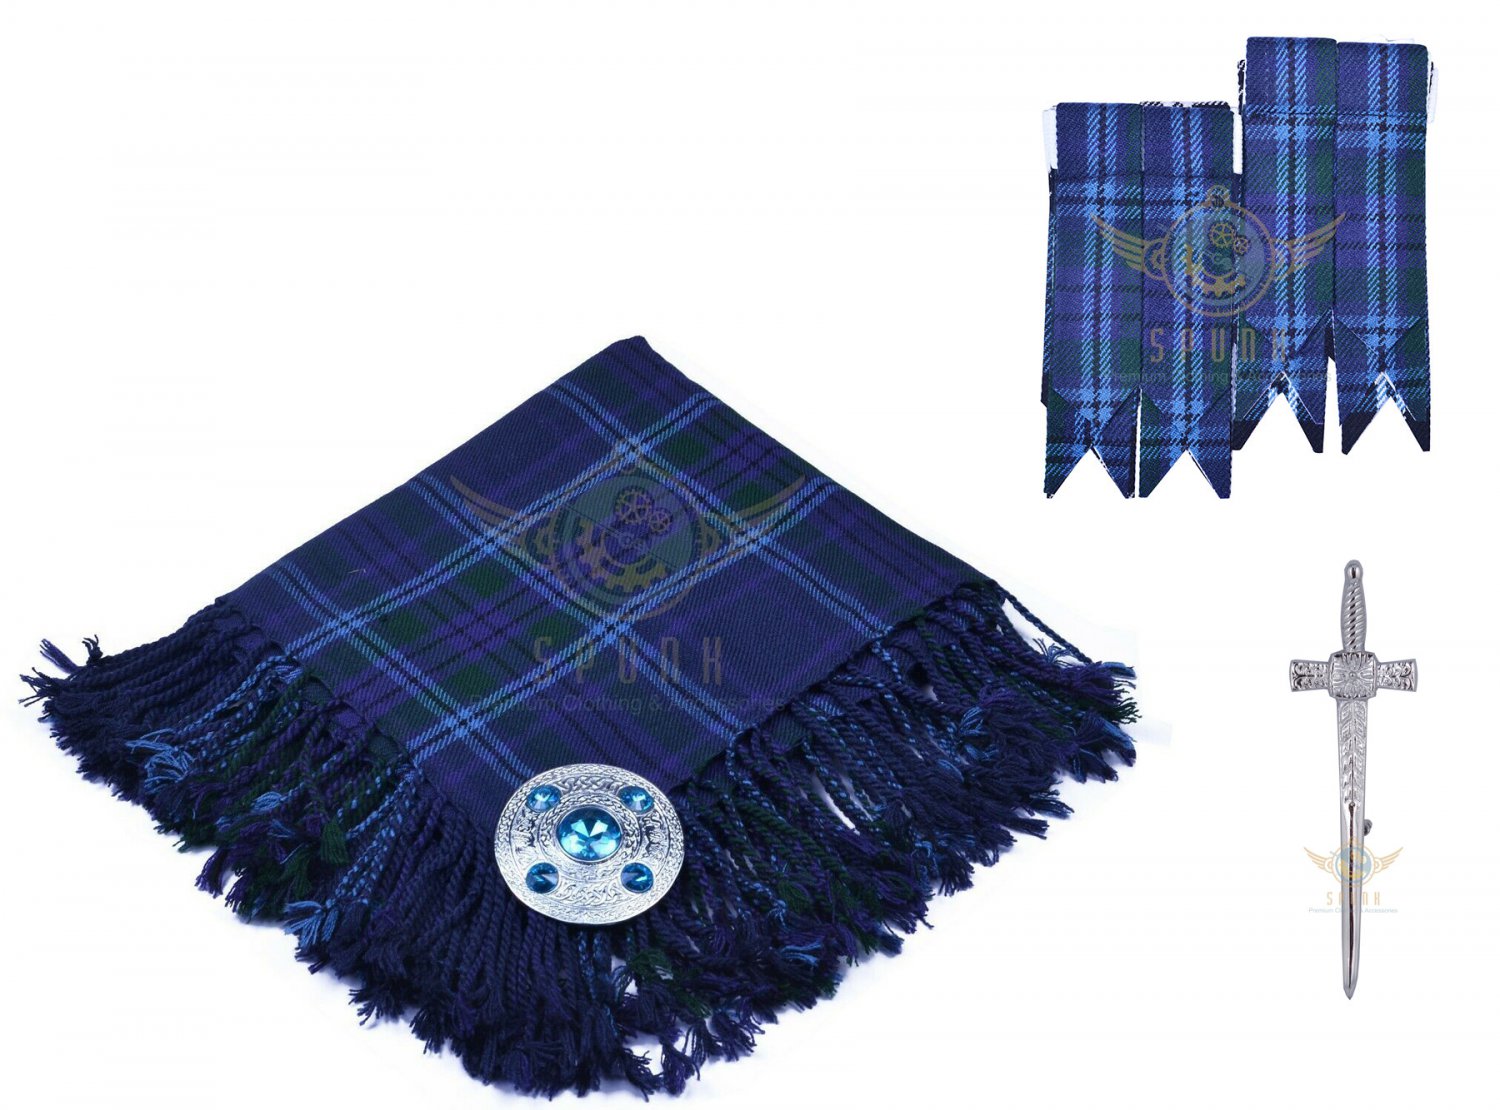 Scottish Traditional Spirit of Scotland Tartan Kilt FLY PLAID + Brooch - Flashes - Kilt pin